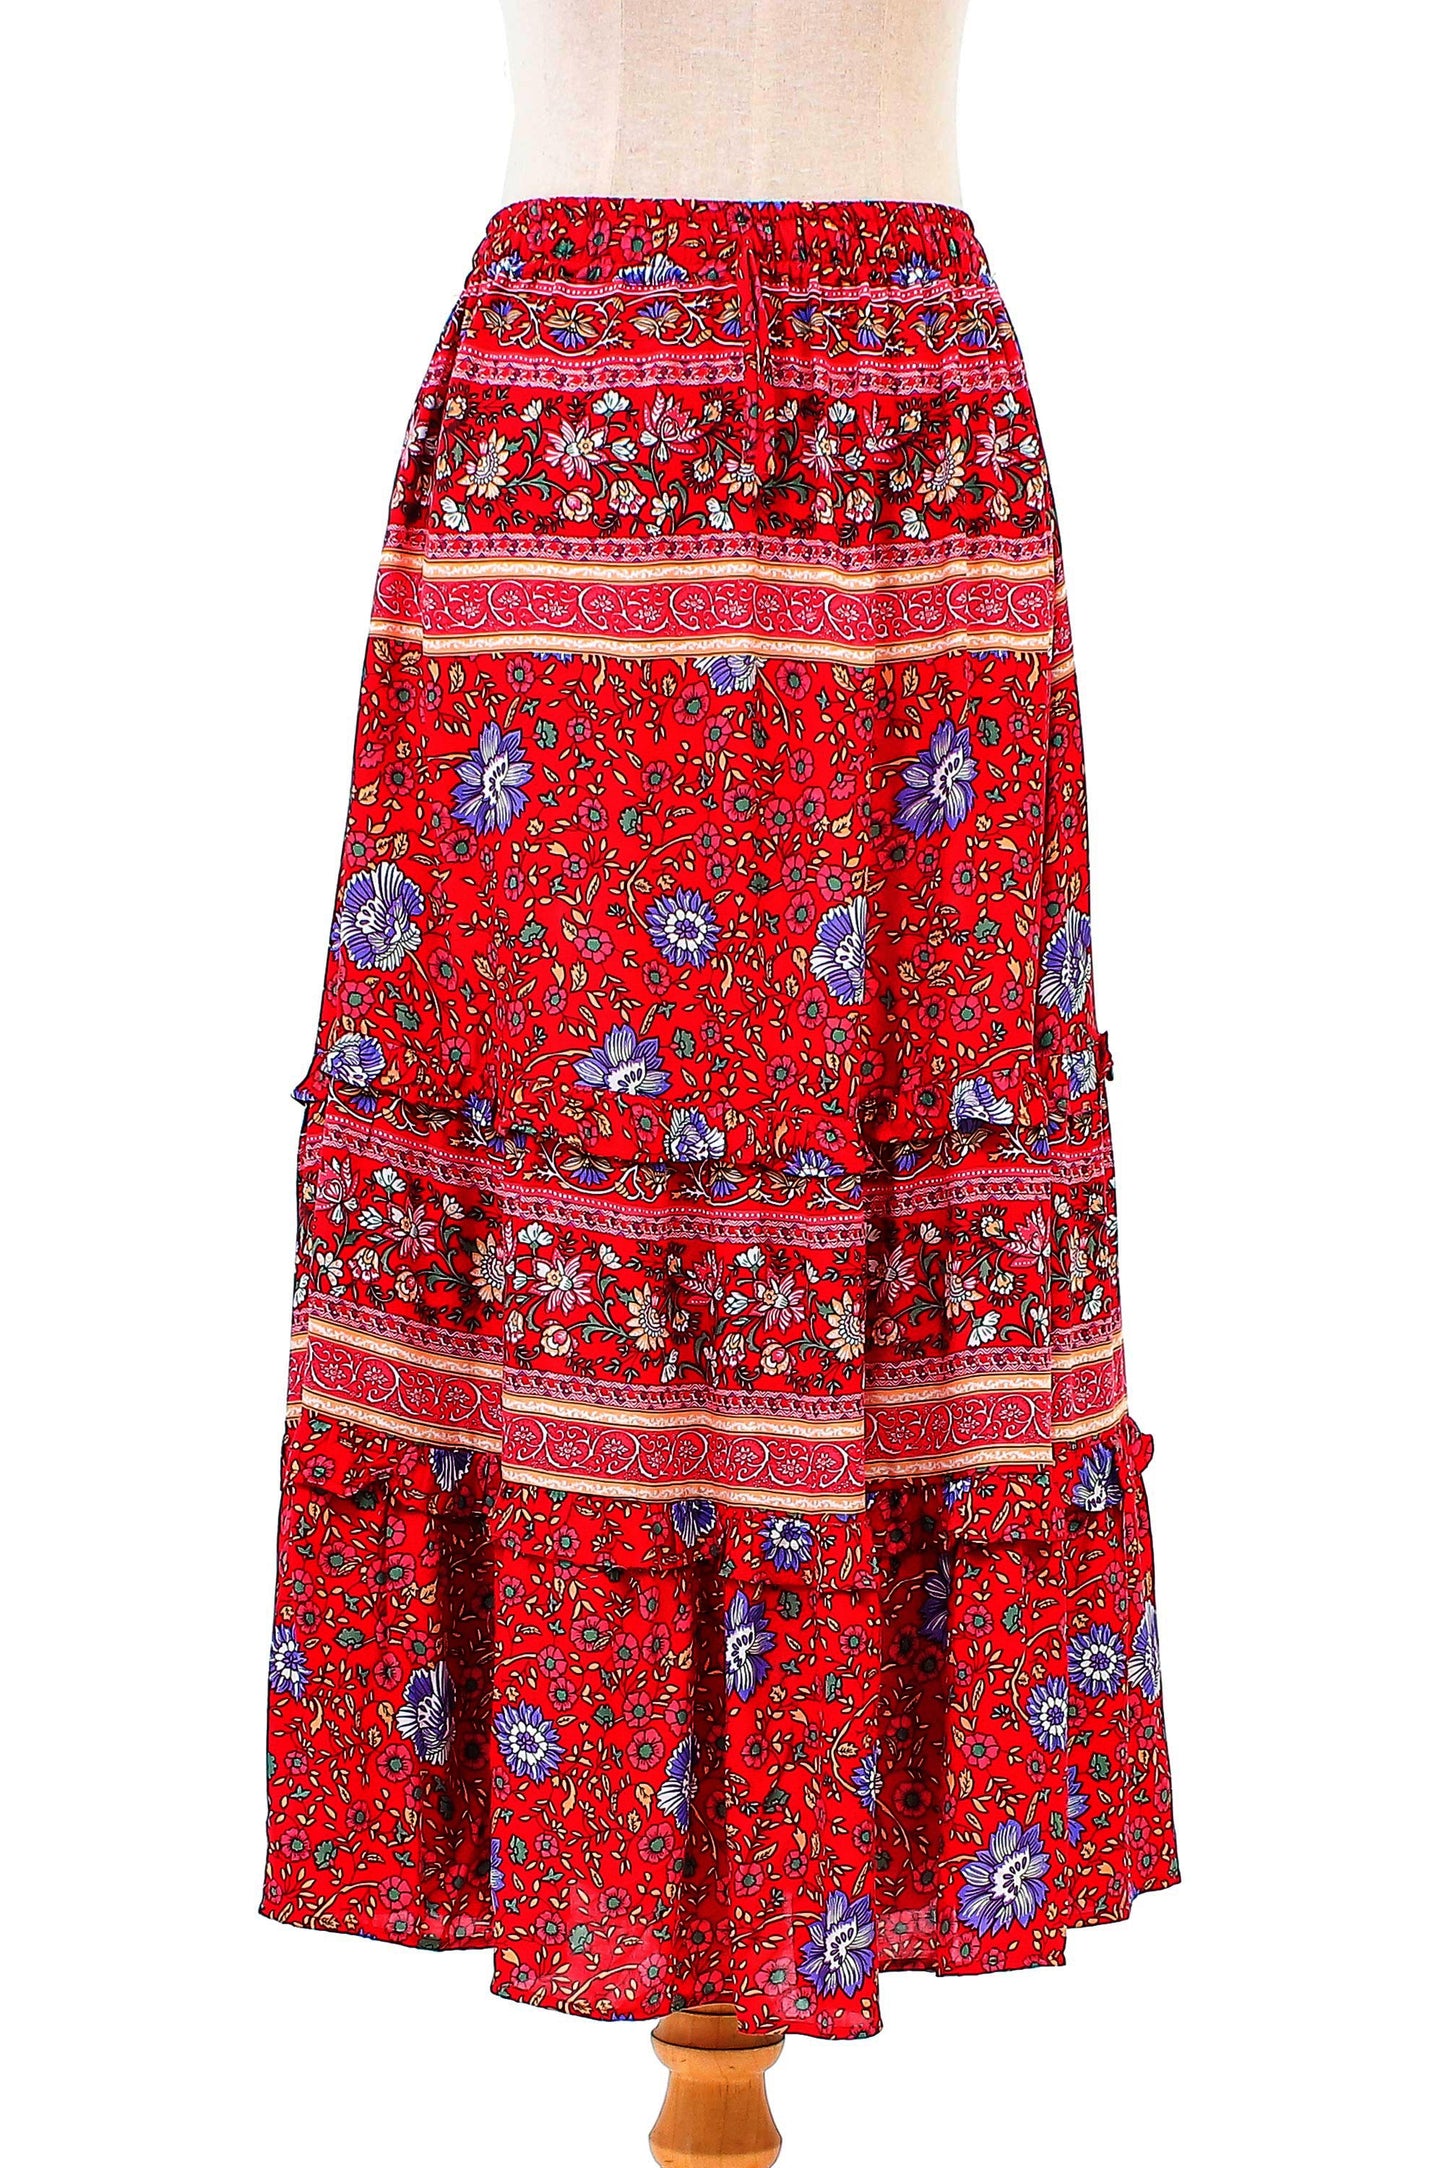 Poppy Garden Floral Rayon Skirt in Poppy Crafted in Thailand